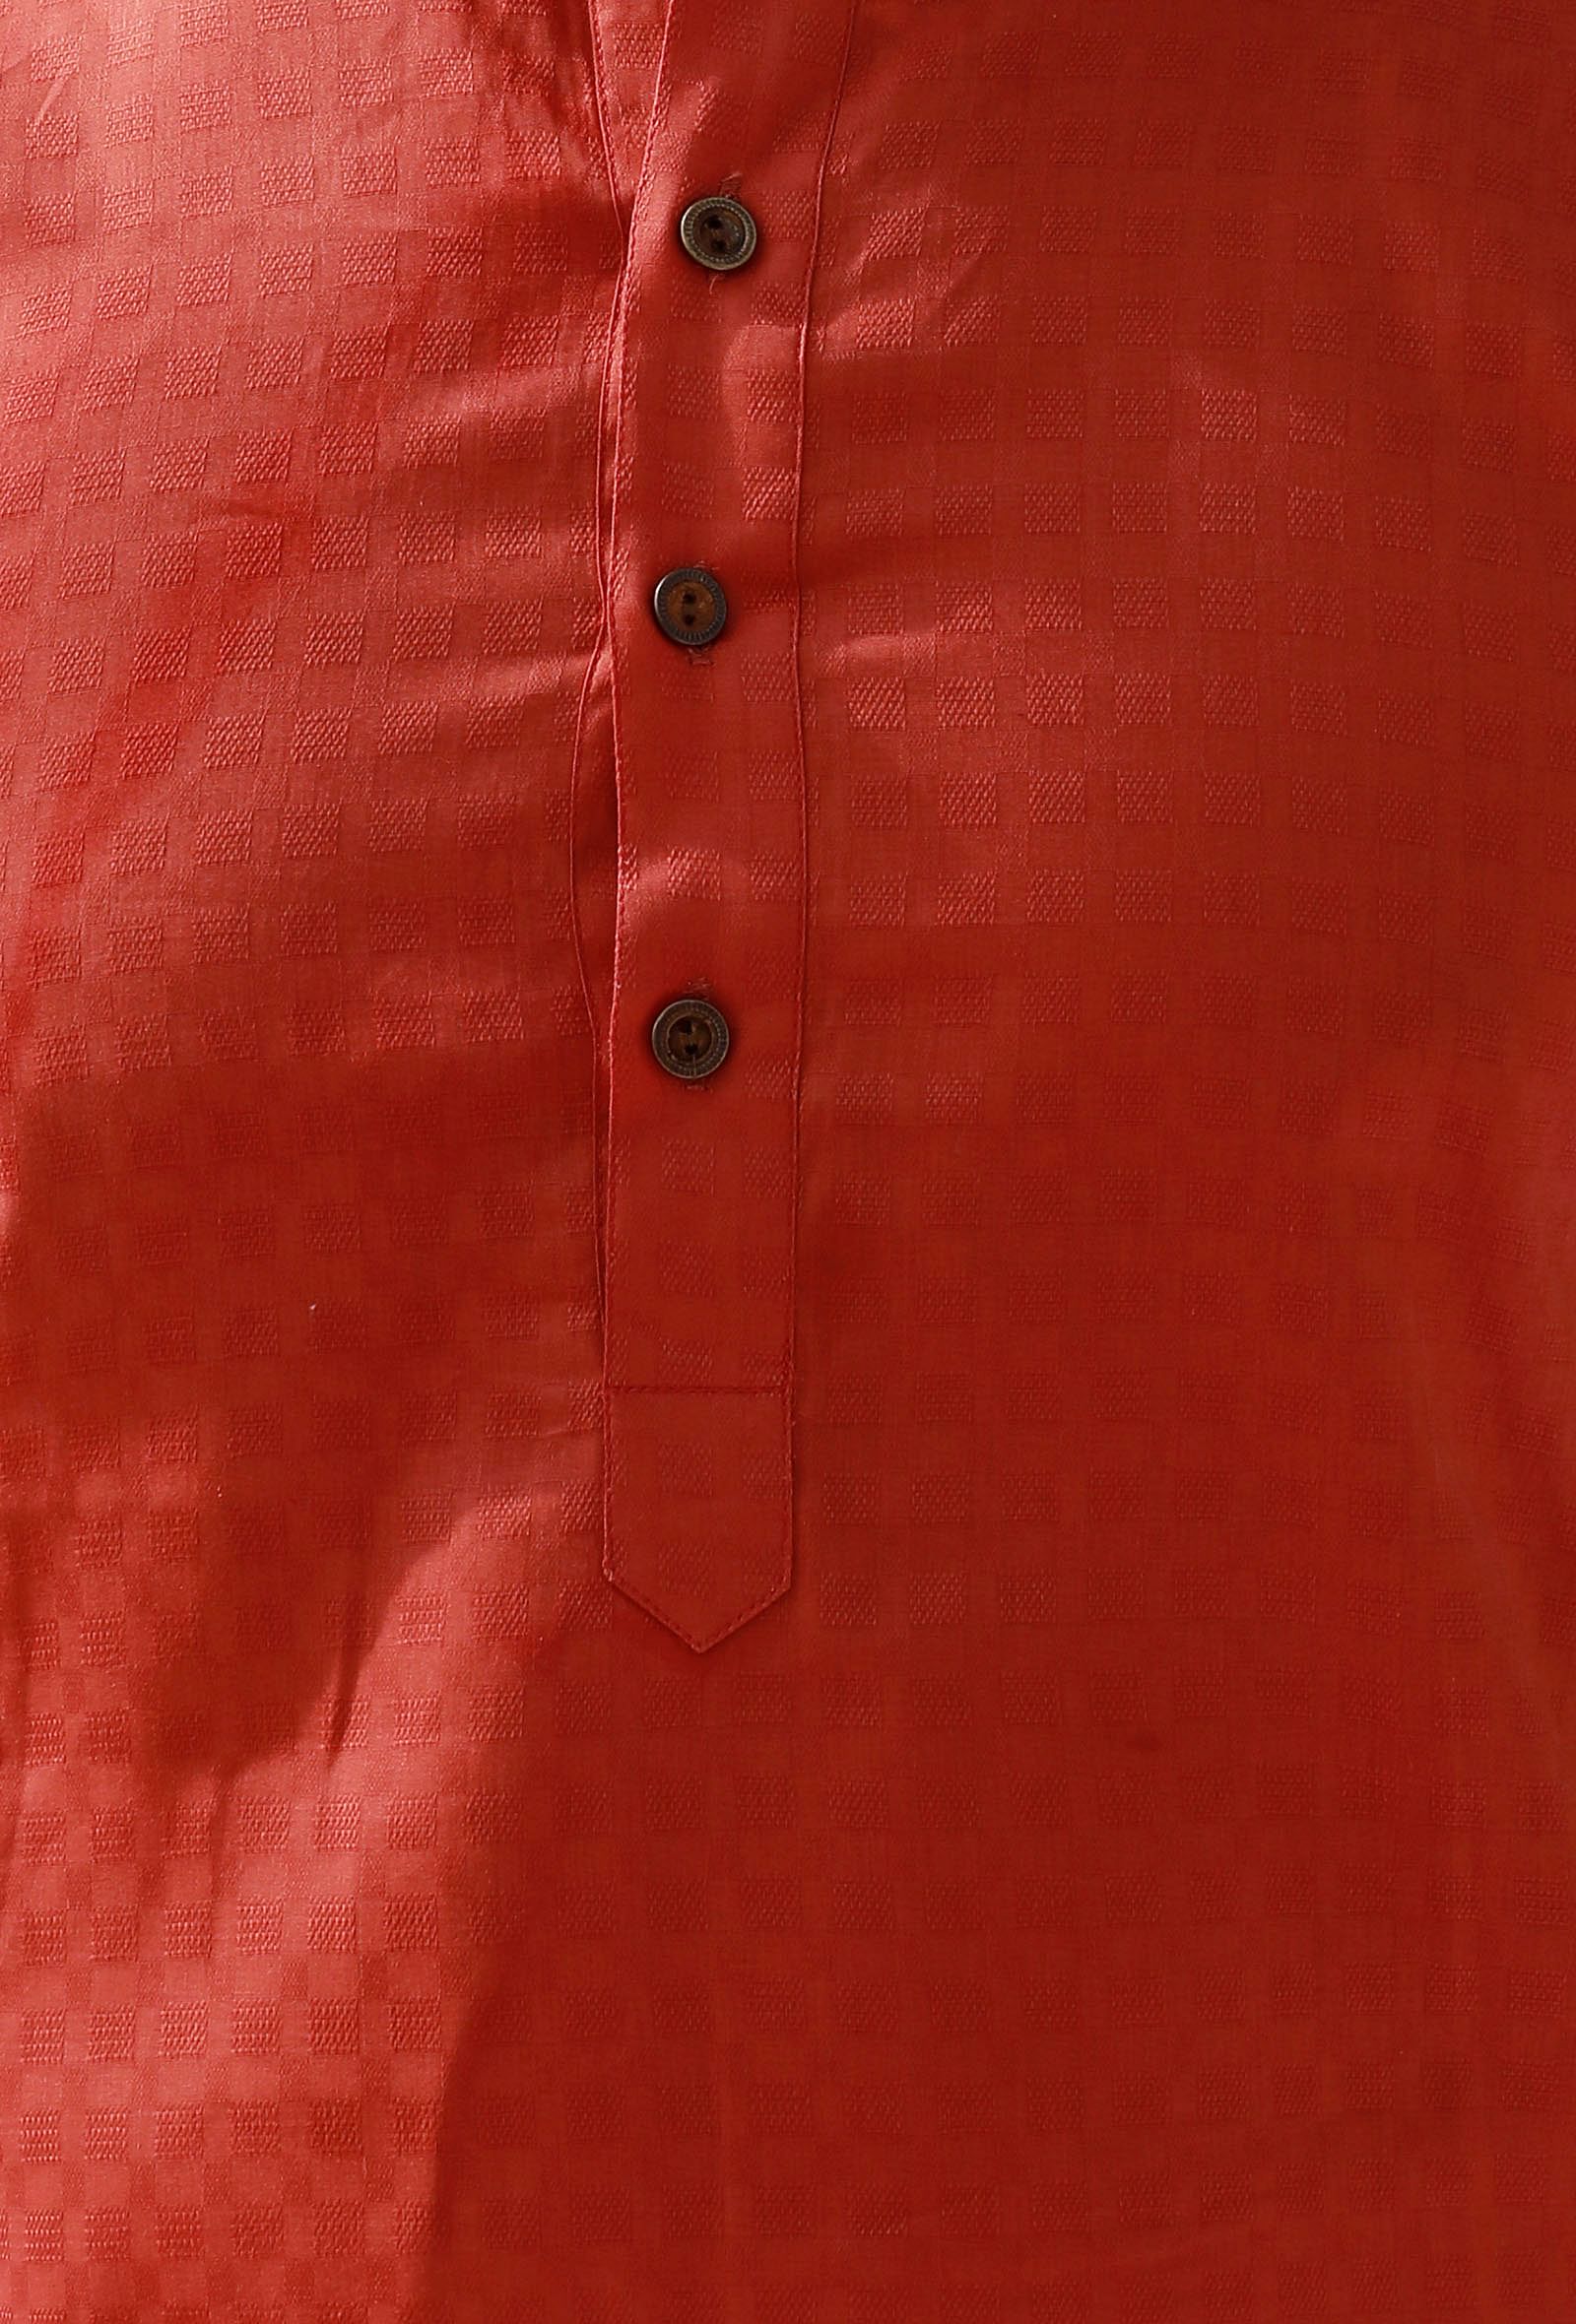 Set Of 2: Scarlet Red Self Weave Cotton Kurta Pyjama Set